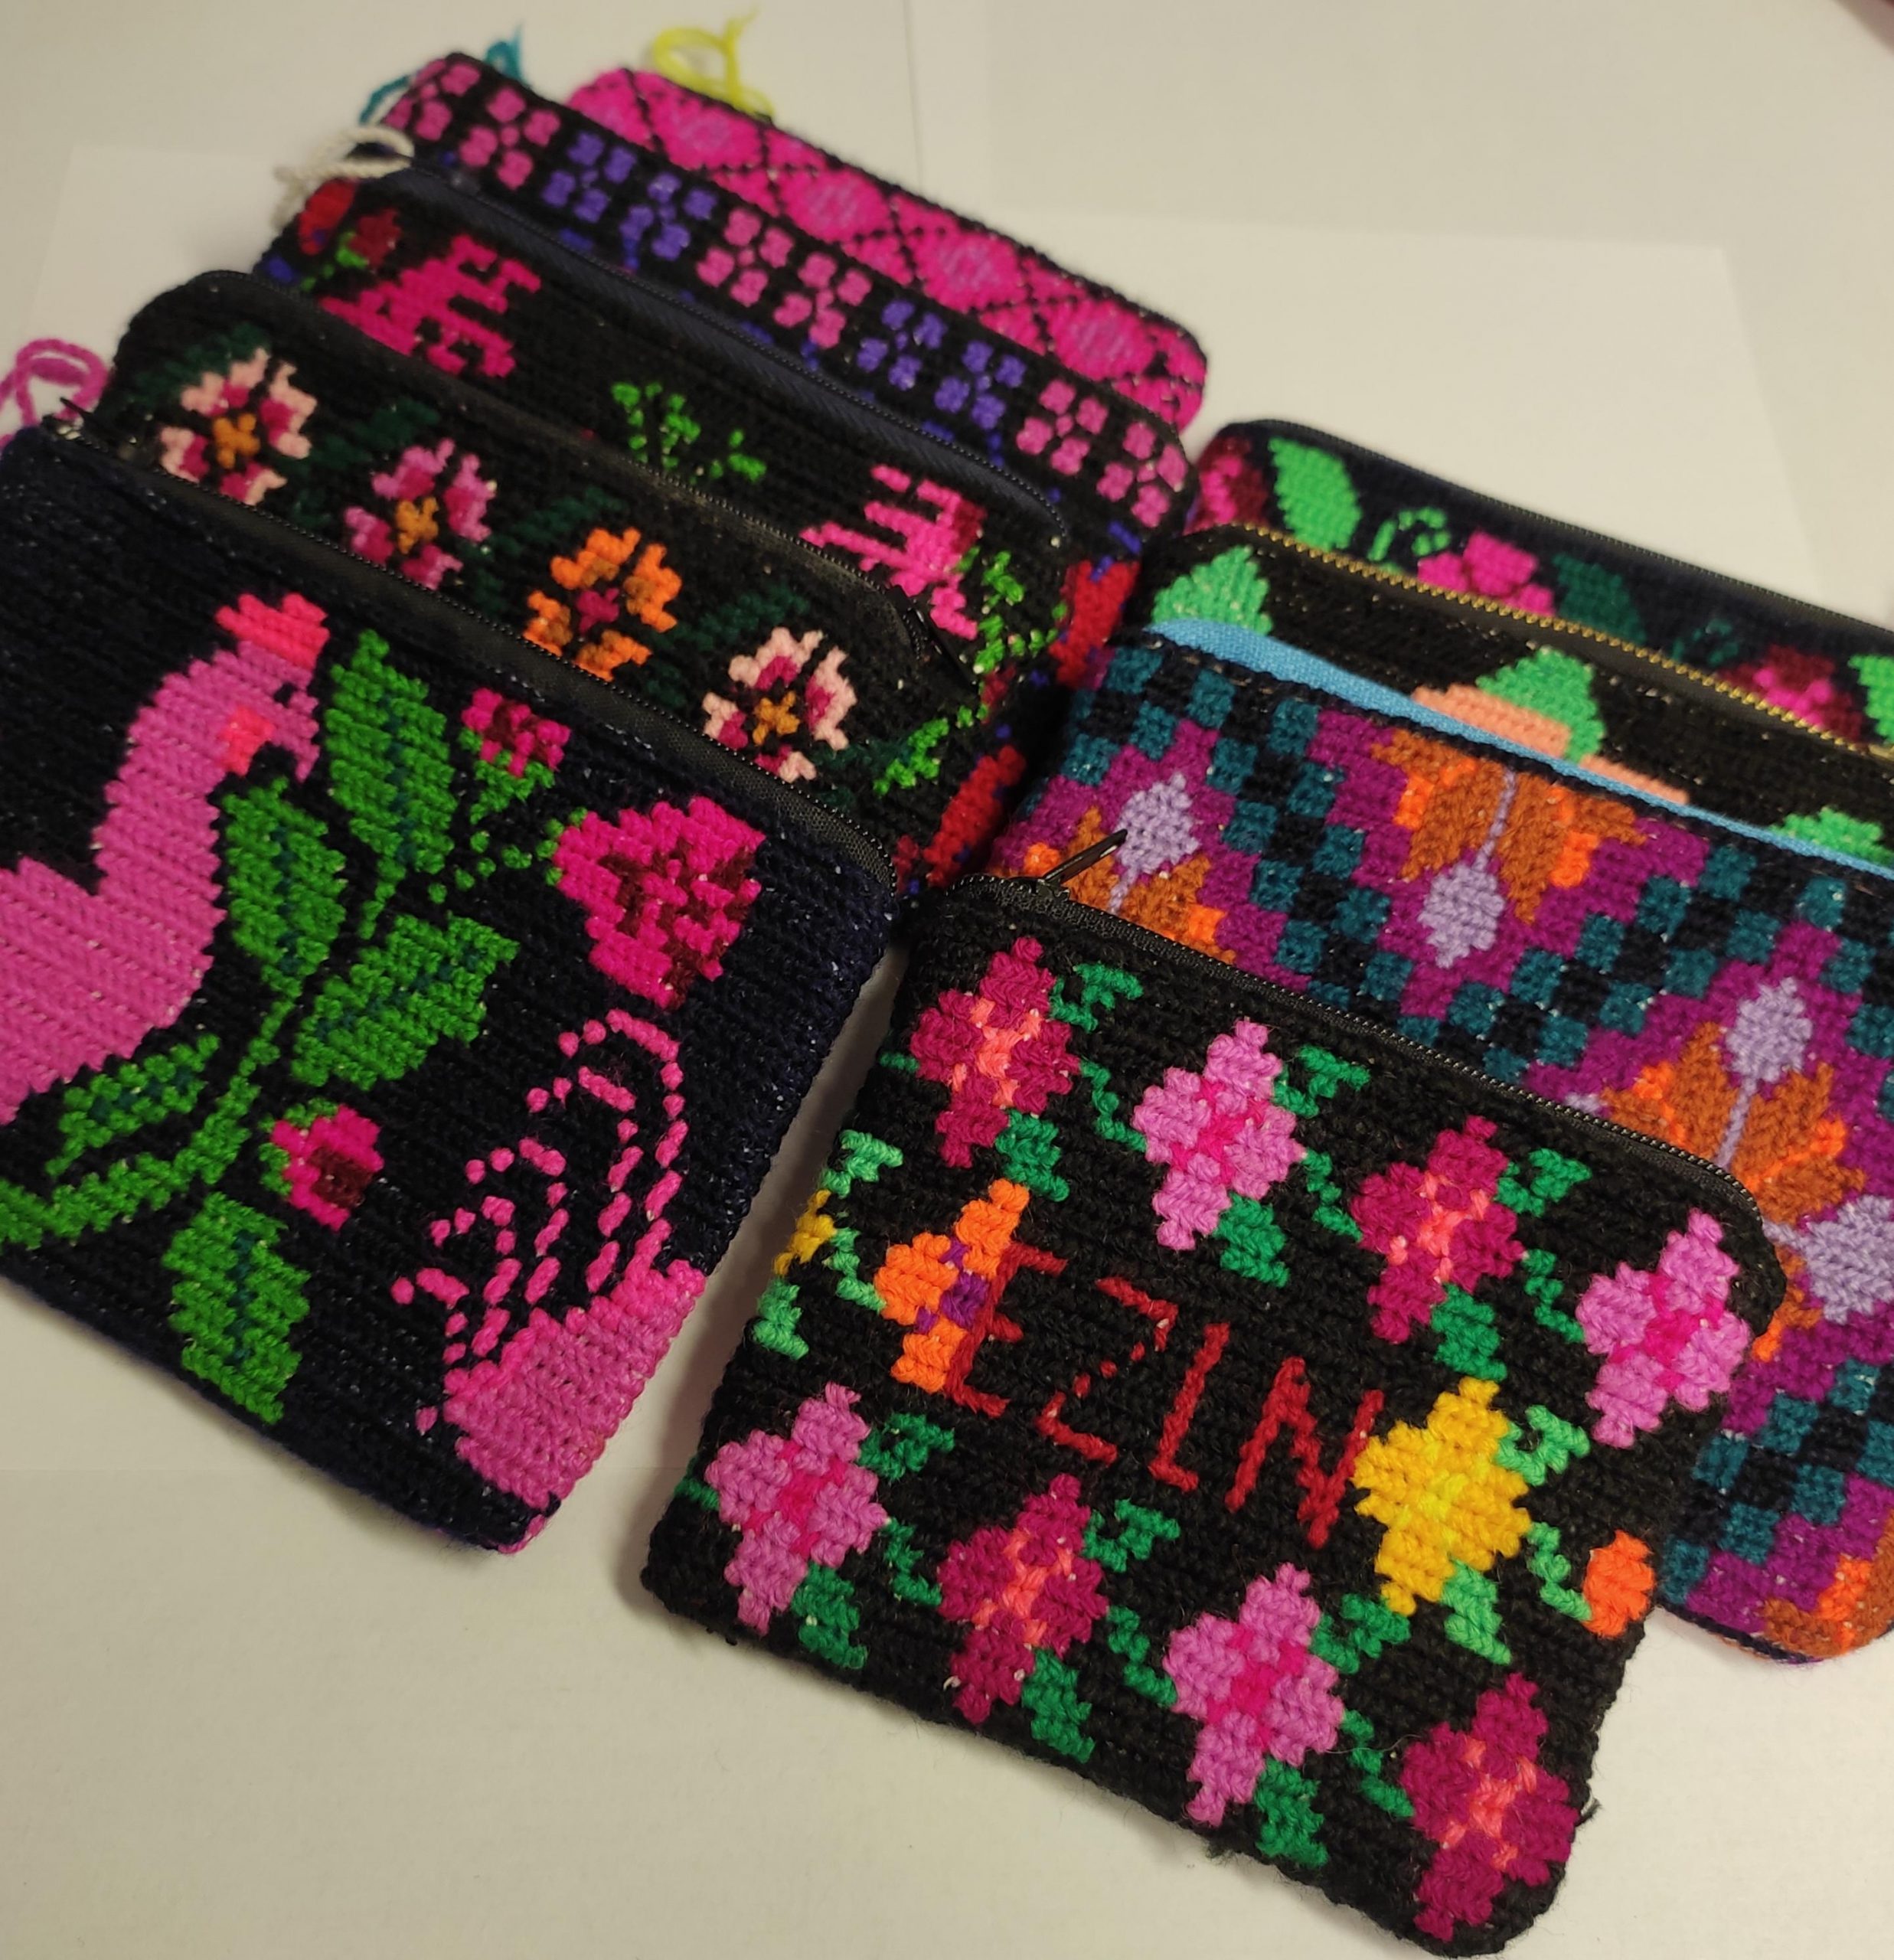 Easy to make || Cross stitch design purse || Jute fabric purse bag tutorial  - YouTube